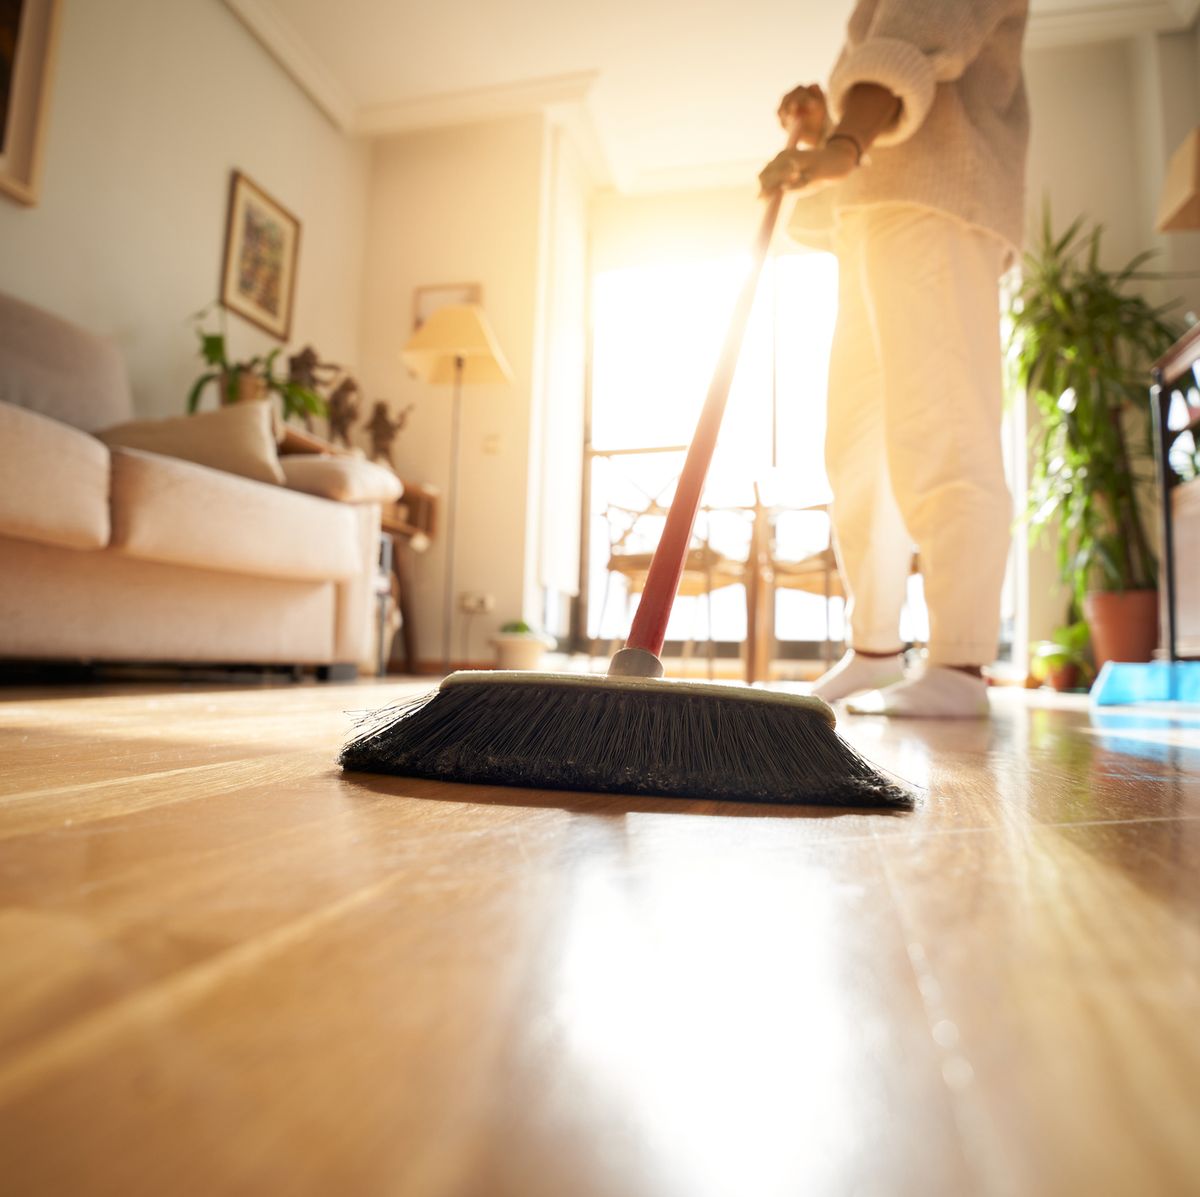 Best Mop For Tile Floors - Perfect Mop For Sparkling Clean Tile Floors 